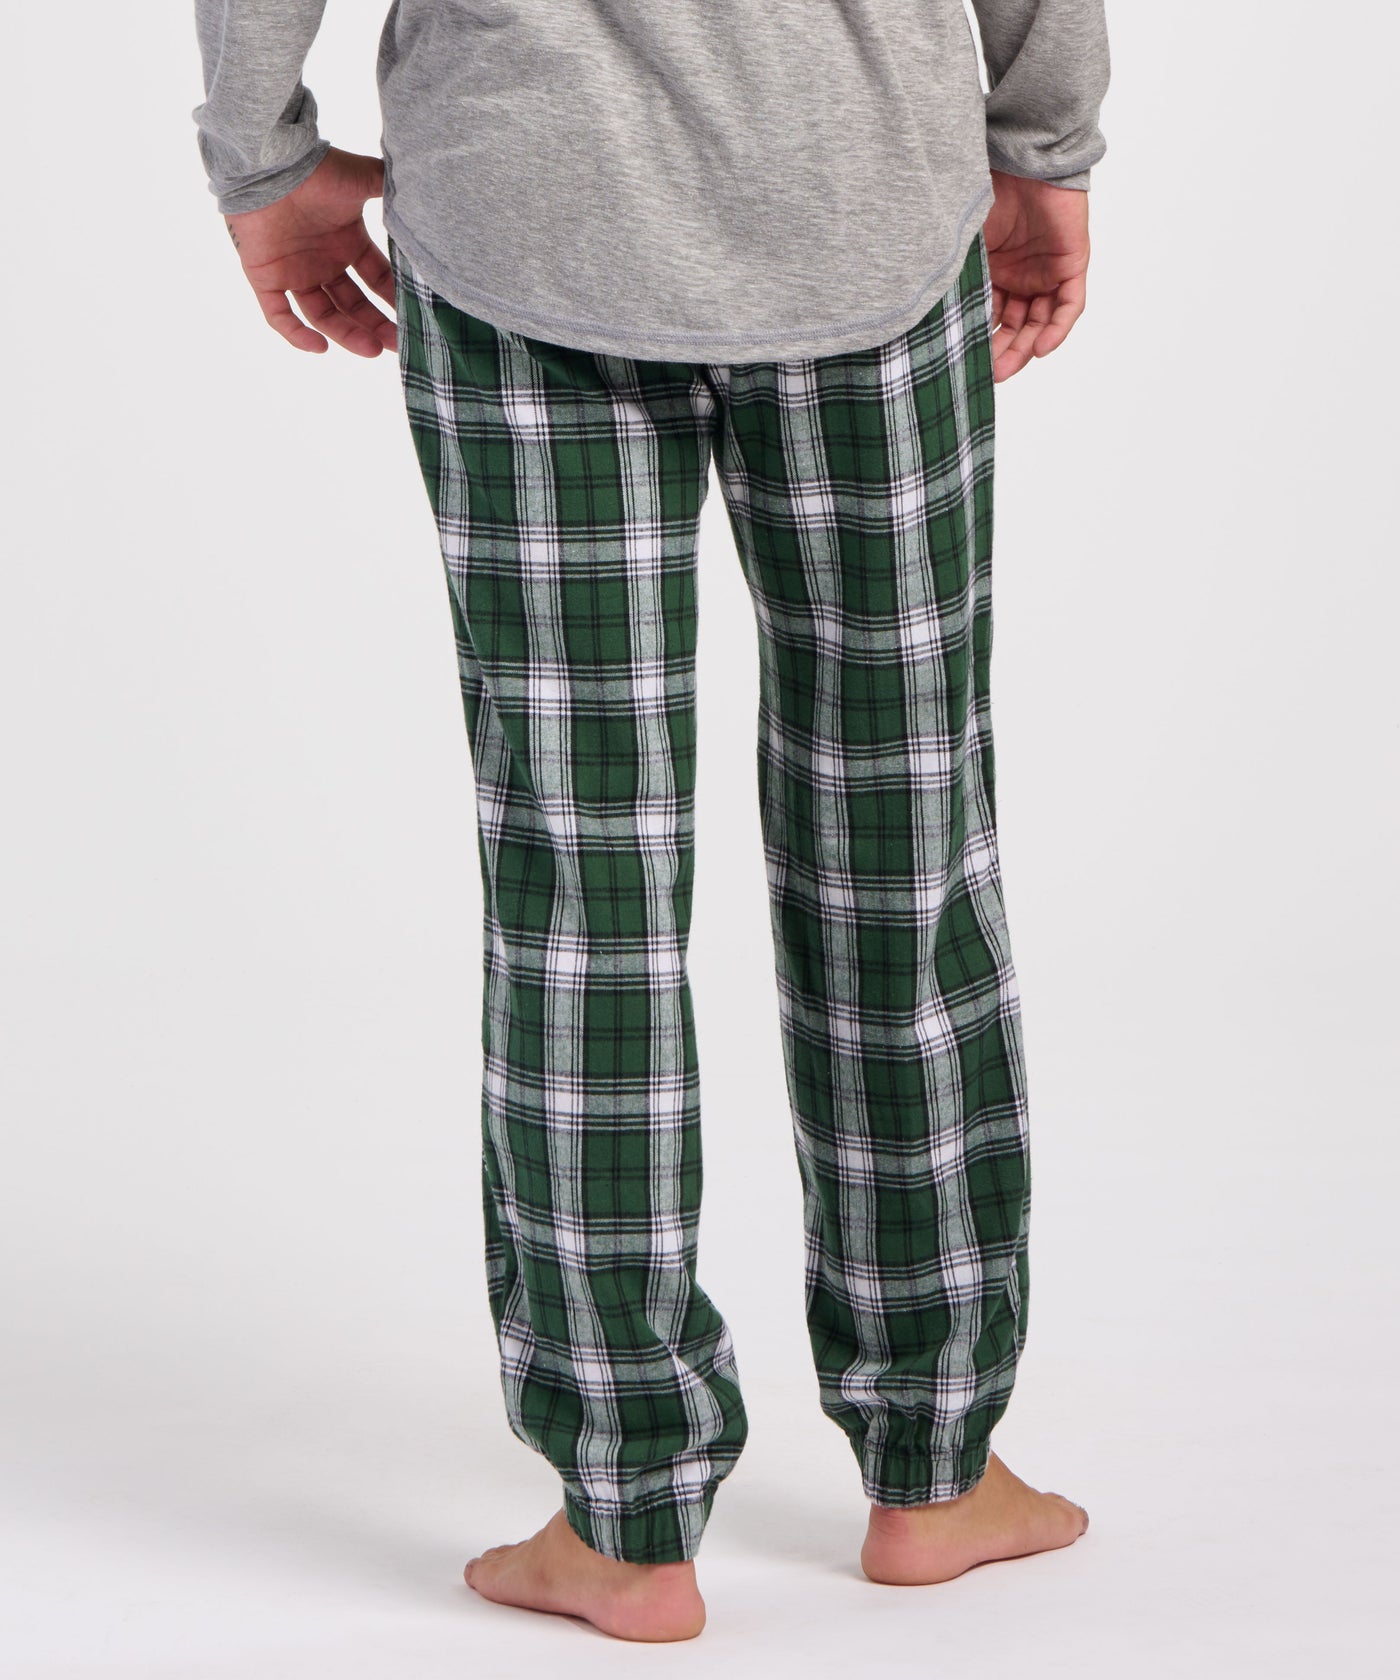 Boxercraft Men's Harley Kingston Plaid Flannel Pajama Pant